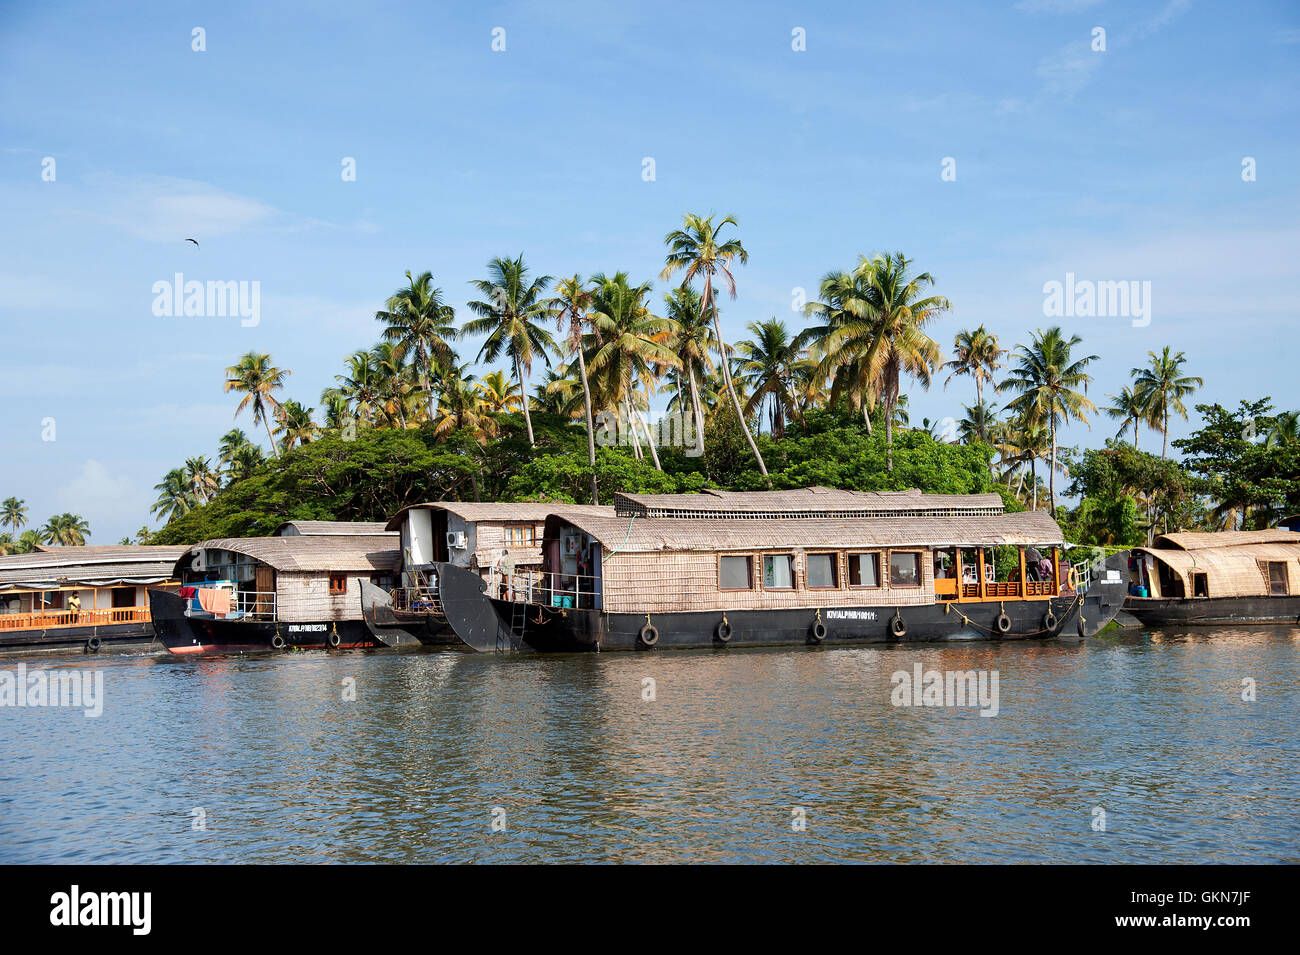 L'image de House Boat en Alleapy, Kerala, Inde Banque D'Images